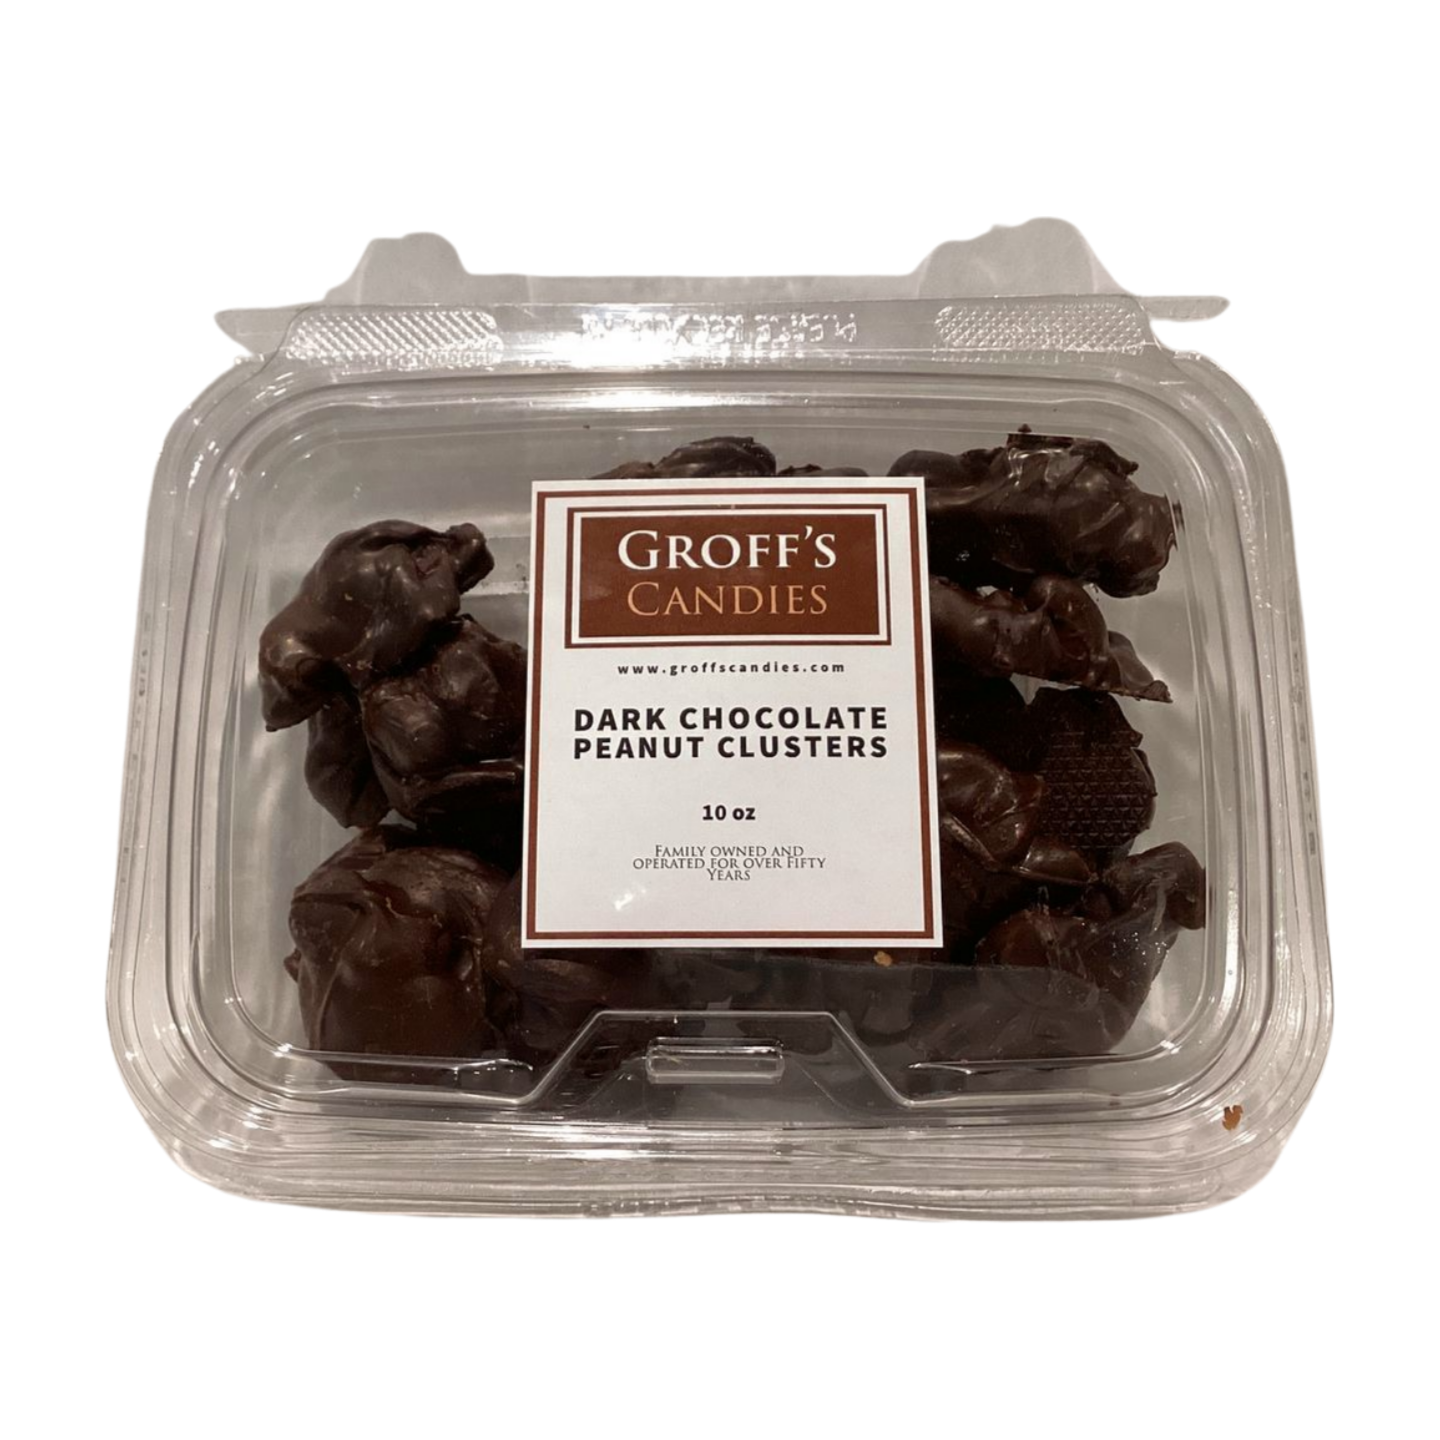 Groff’s Candies Dark Chocolate Peanut Clusters